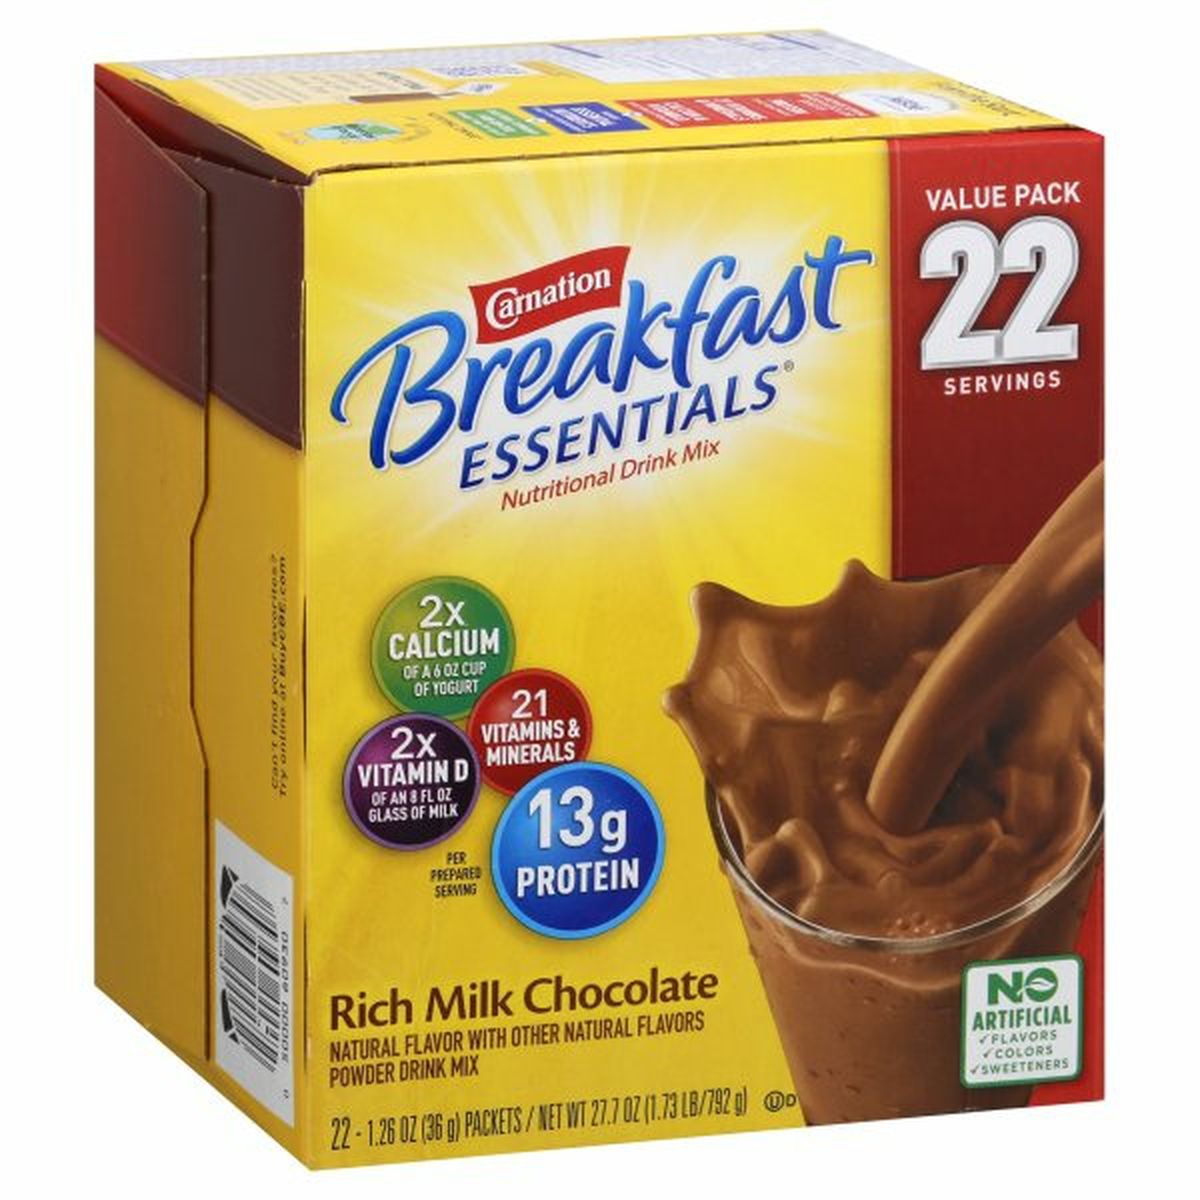 Calories in Carnation Breakfast Essentials Nutritional Drink Mix, Rich Milk Chocolate, Value Pack